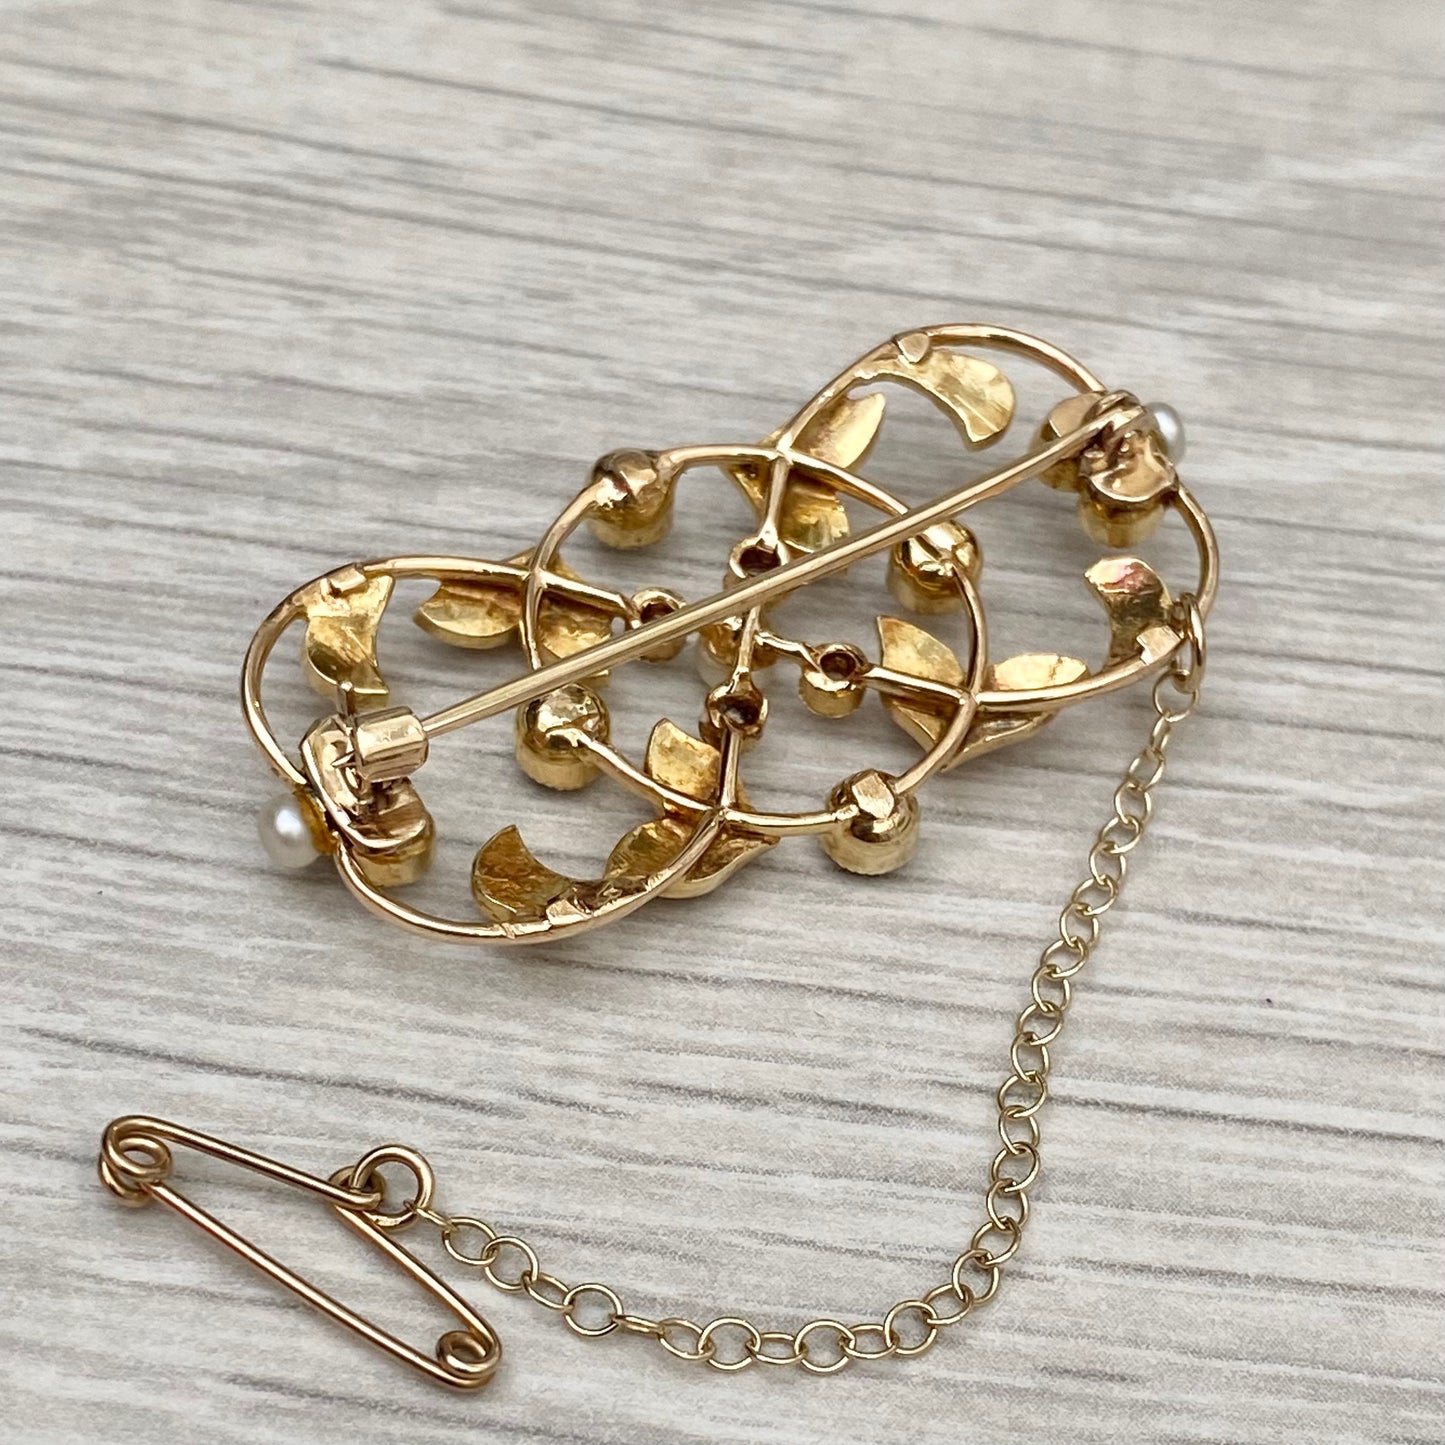 Vintage 9ct yellow gold diamond and seed pearl geometric leaf design brooch - 9k gold -  British vintage jewellery